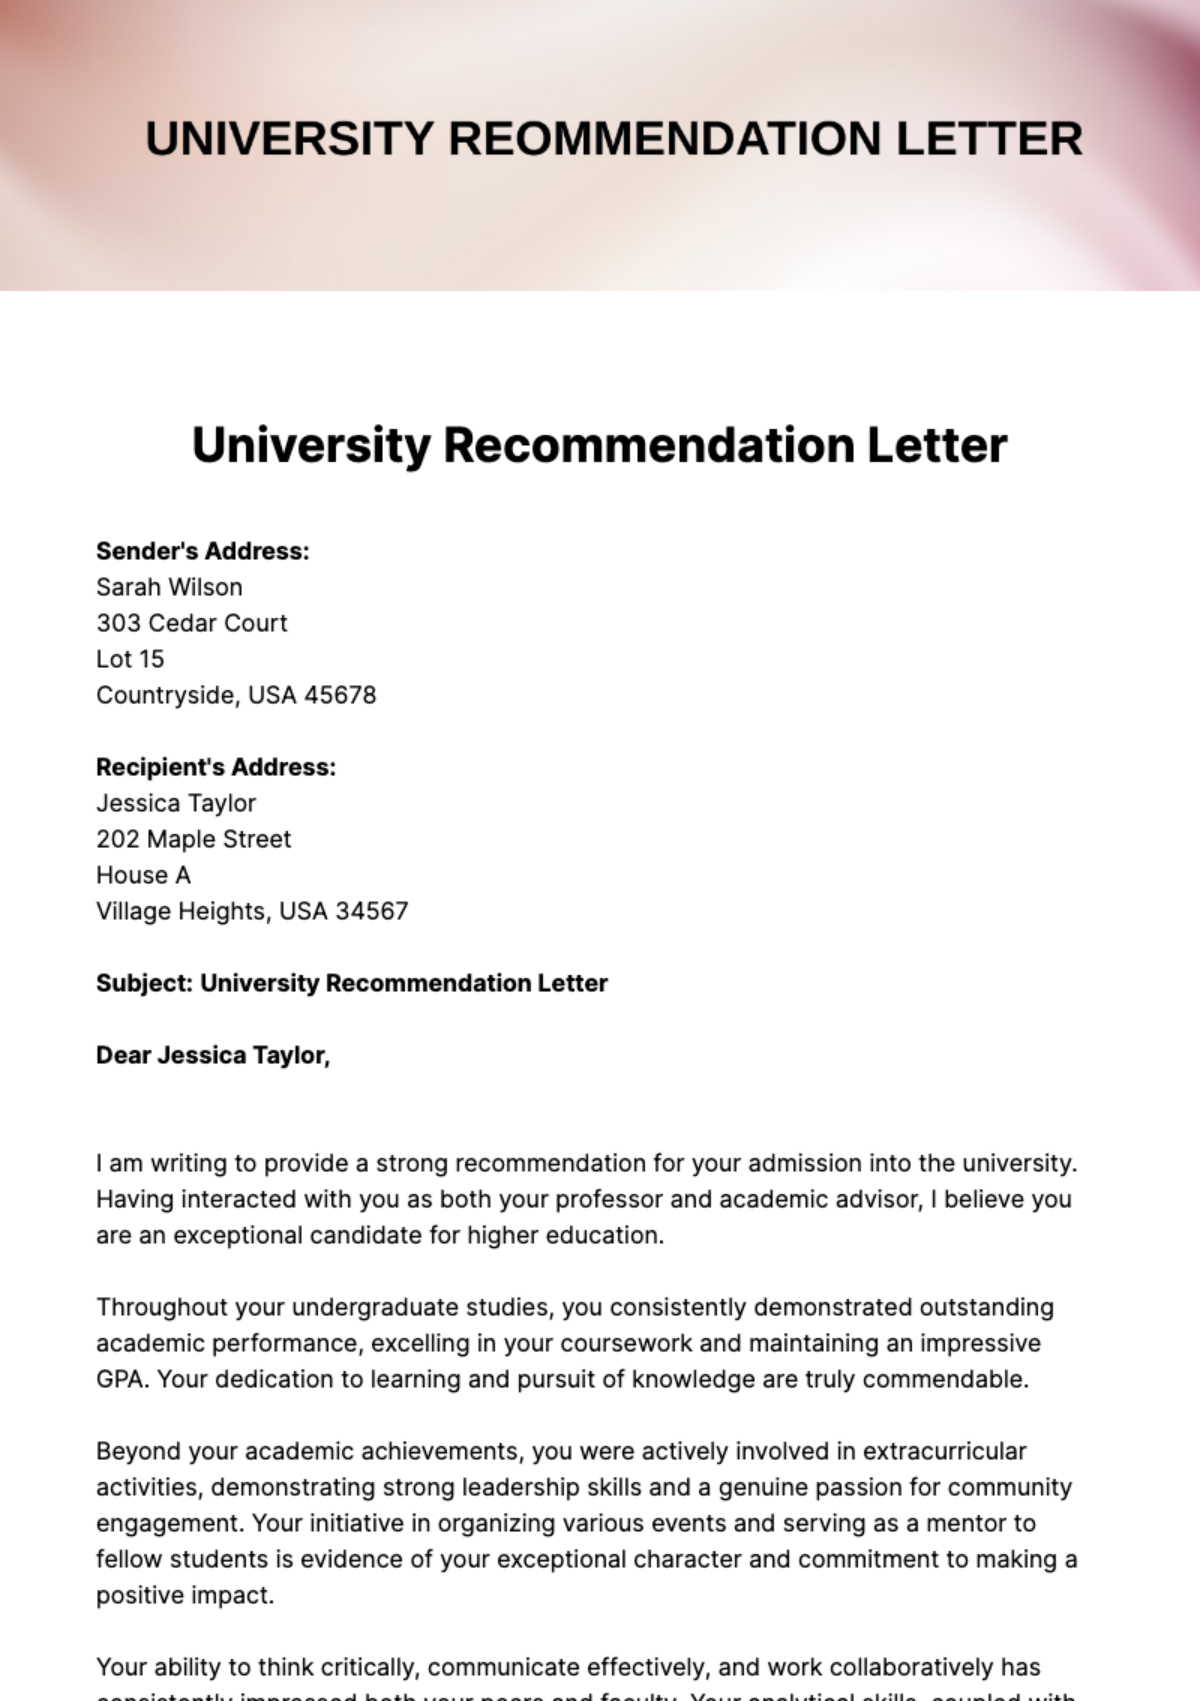 University Recommendation Letter Template